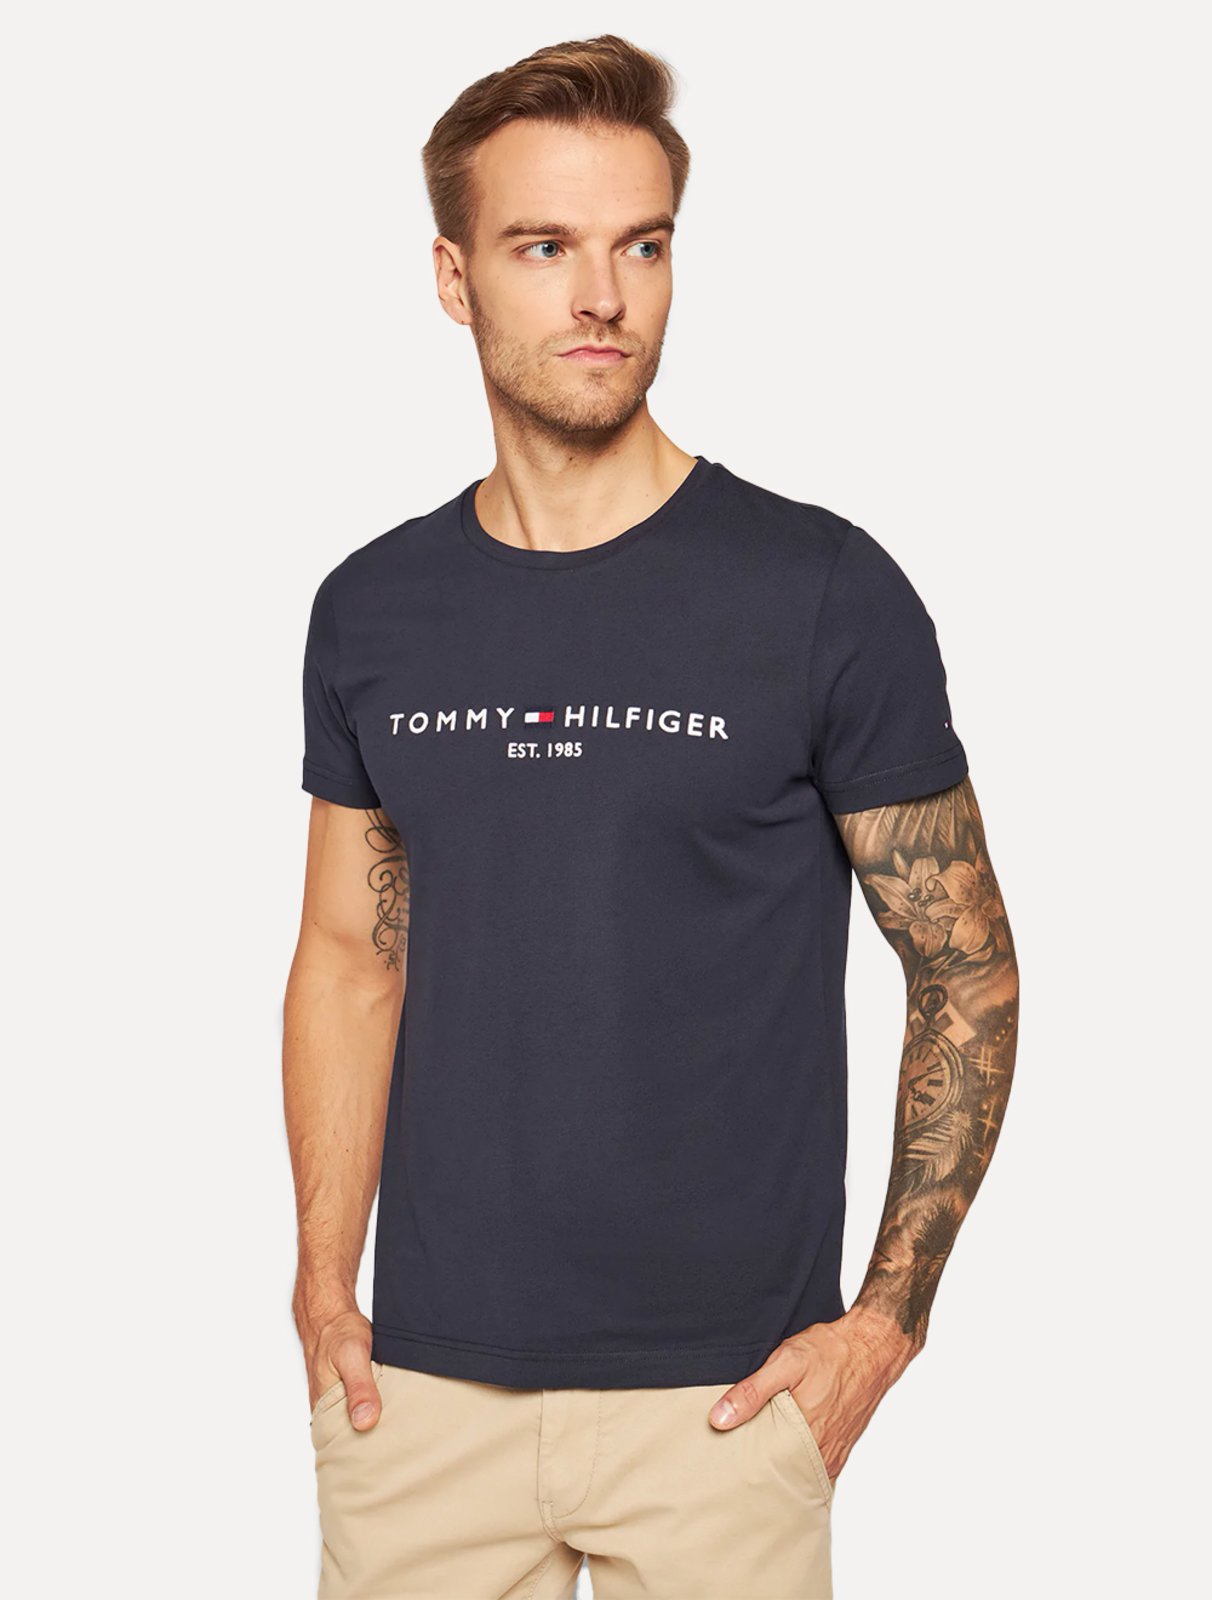 Camiseta Tommy Hilfiger Masculina Essential Flag Sash Azul Marinho 